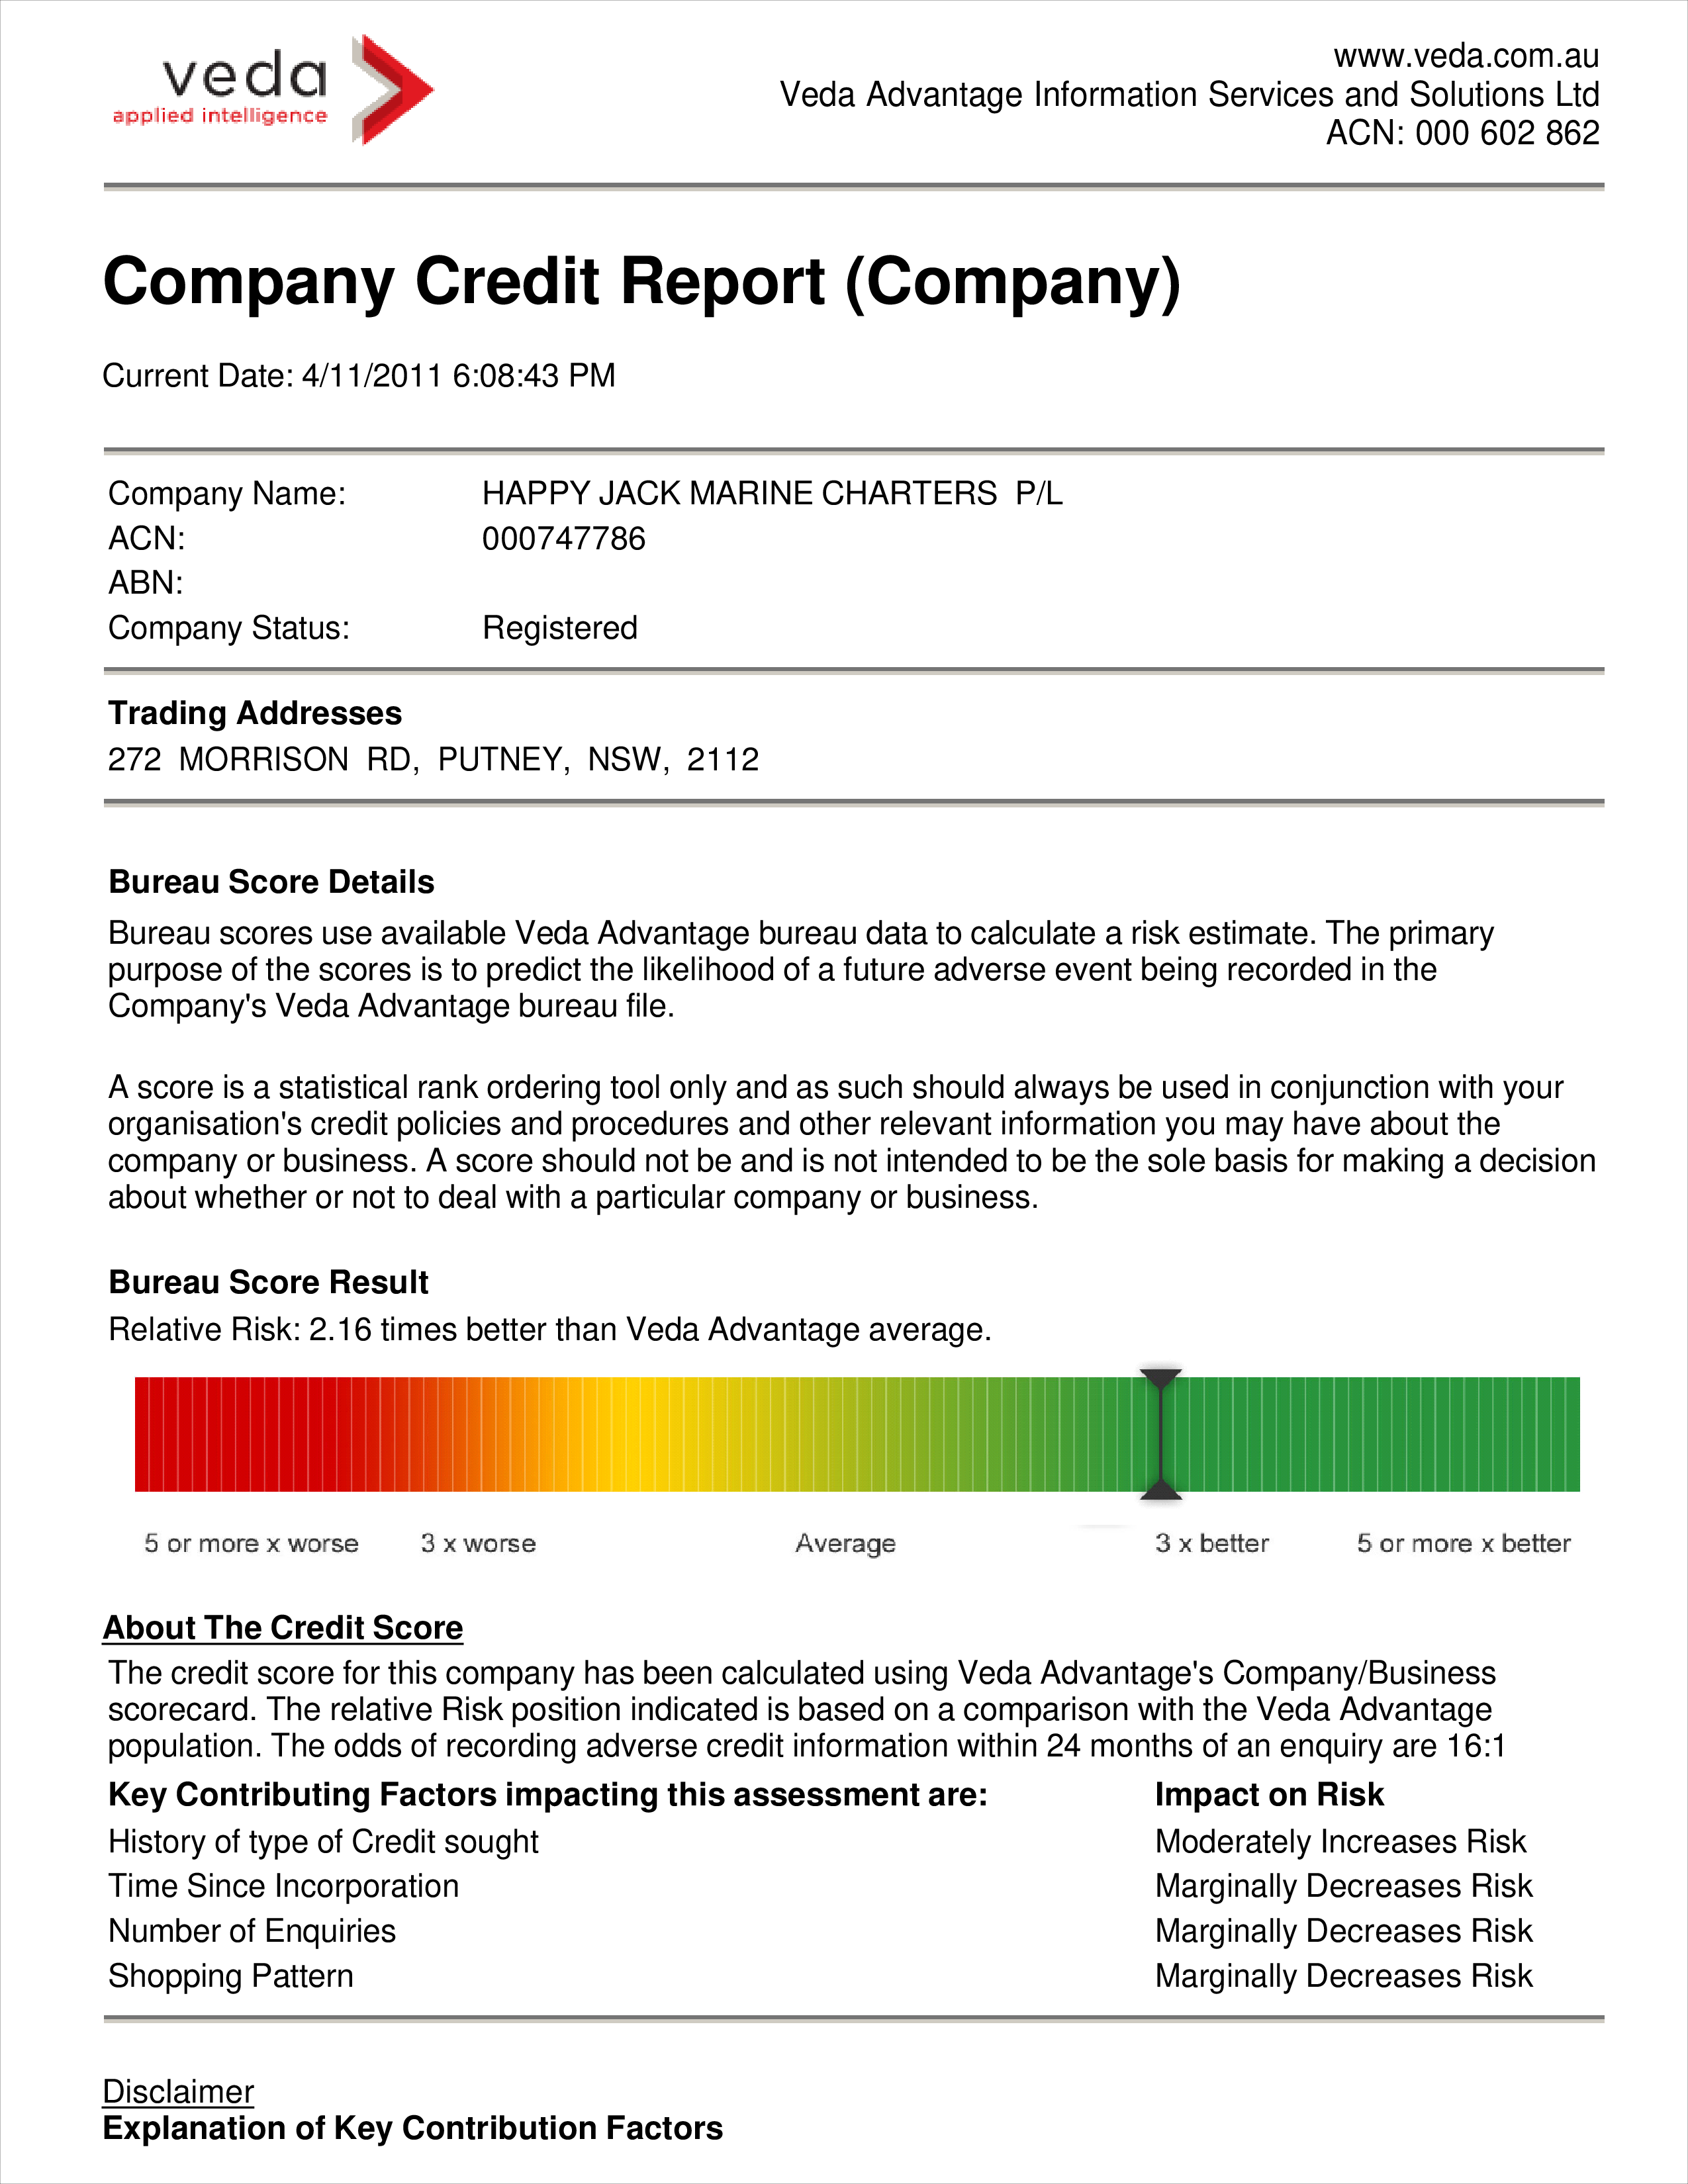 Company Credit Report main image